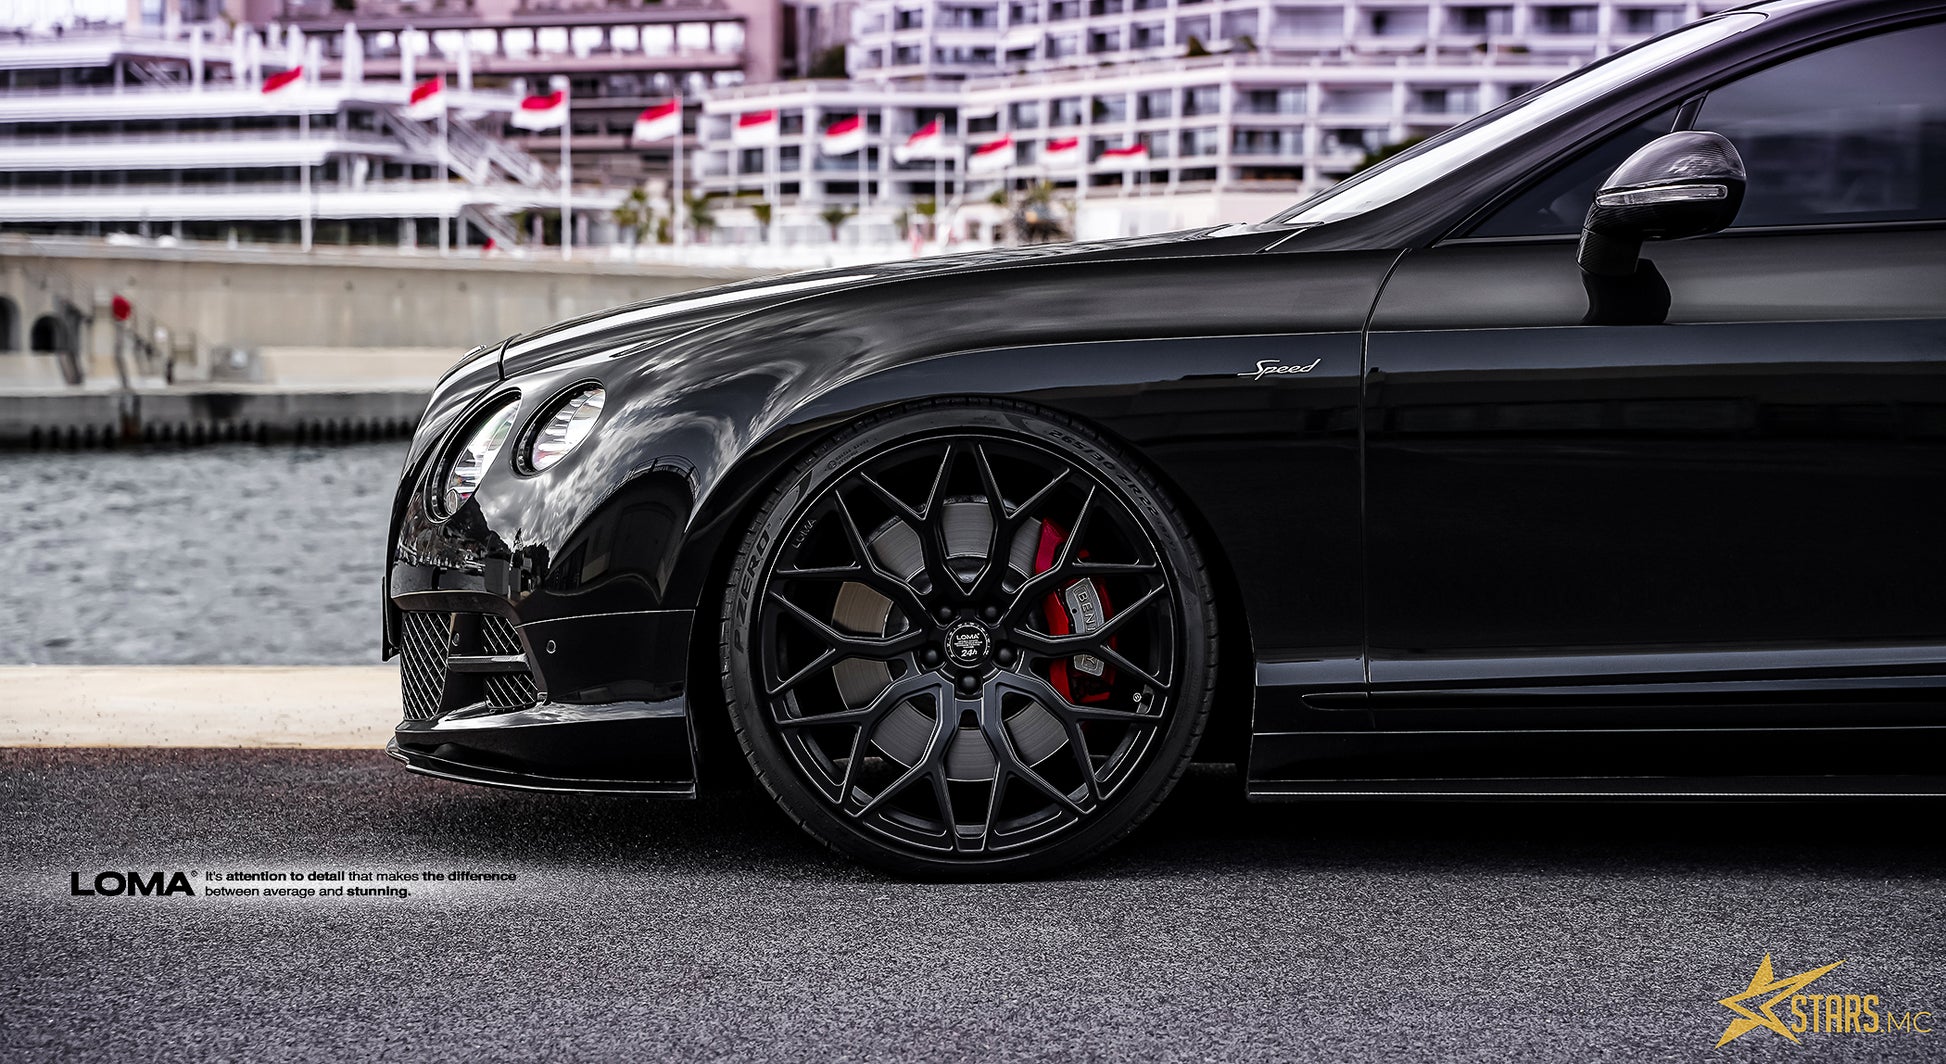 Bentley GT Speed showcasing its custom staggered wheels